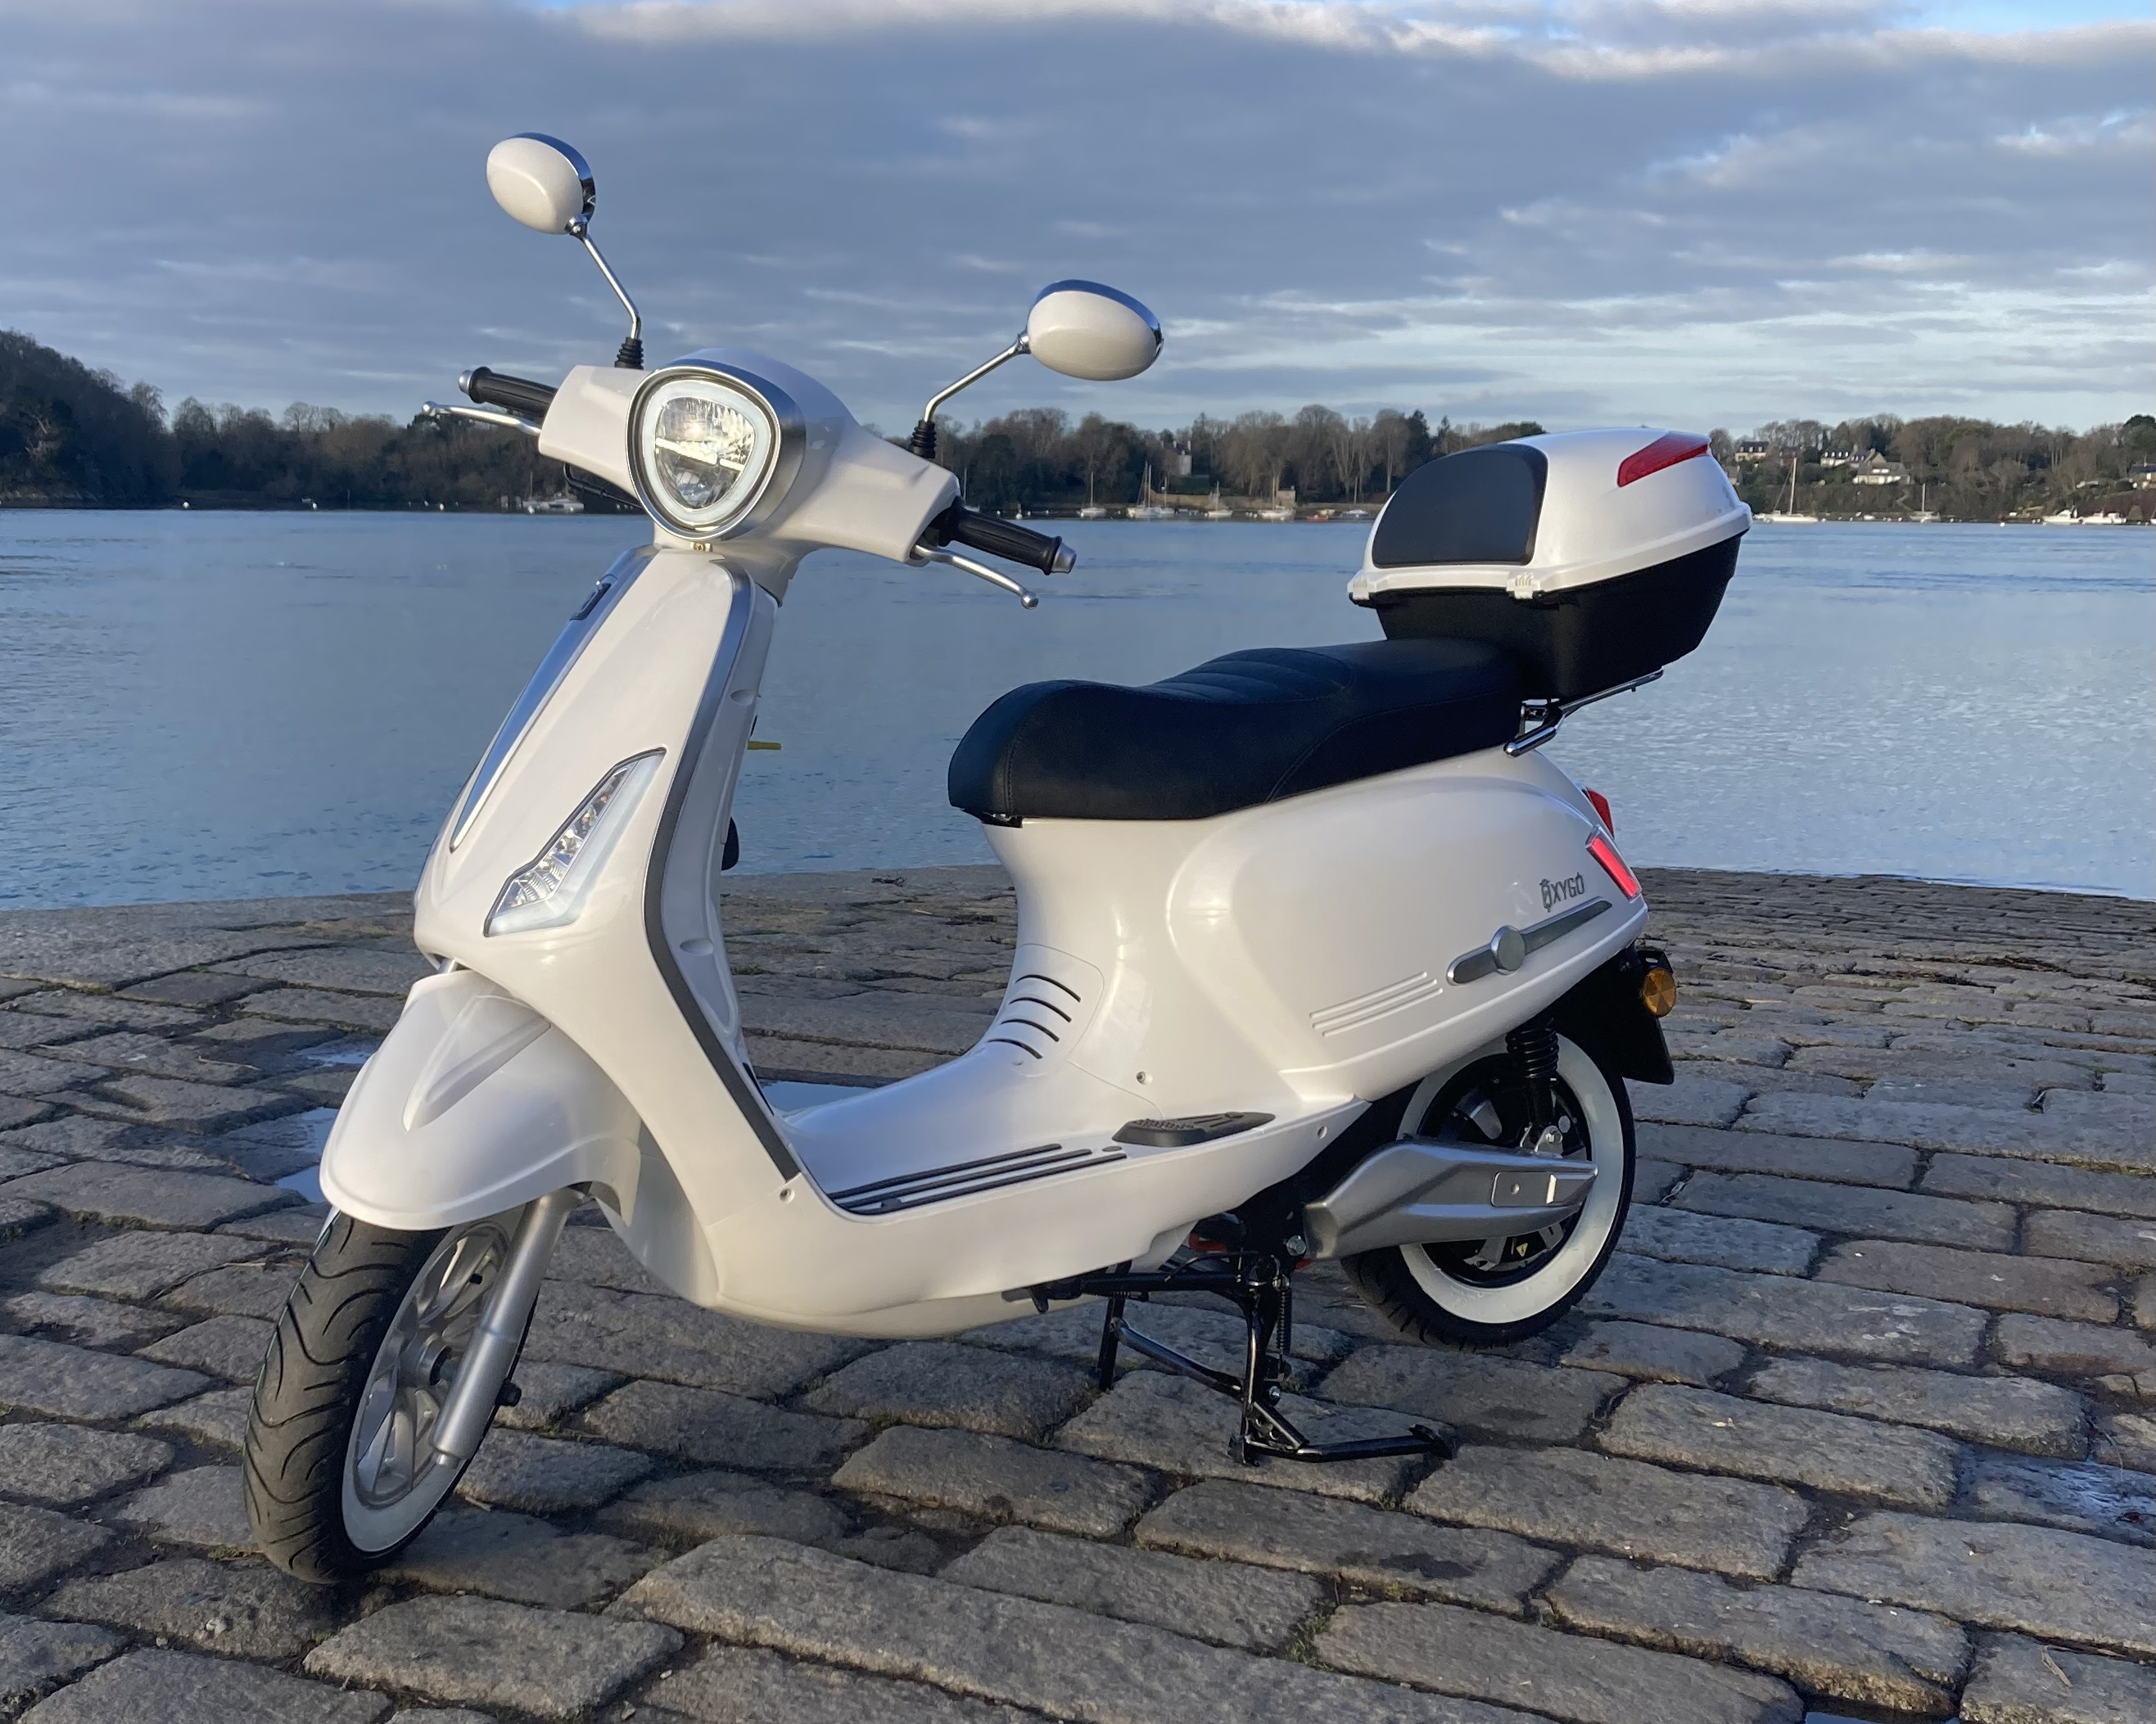 Location de scooter - Oxygo - Saint-Malo